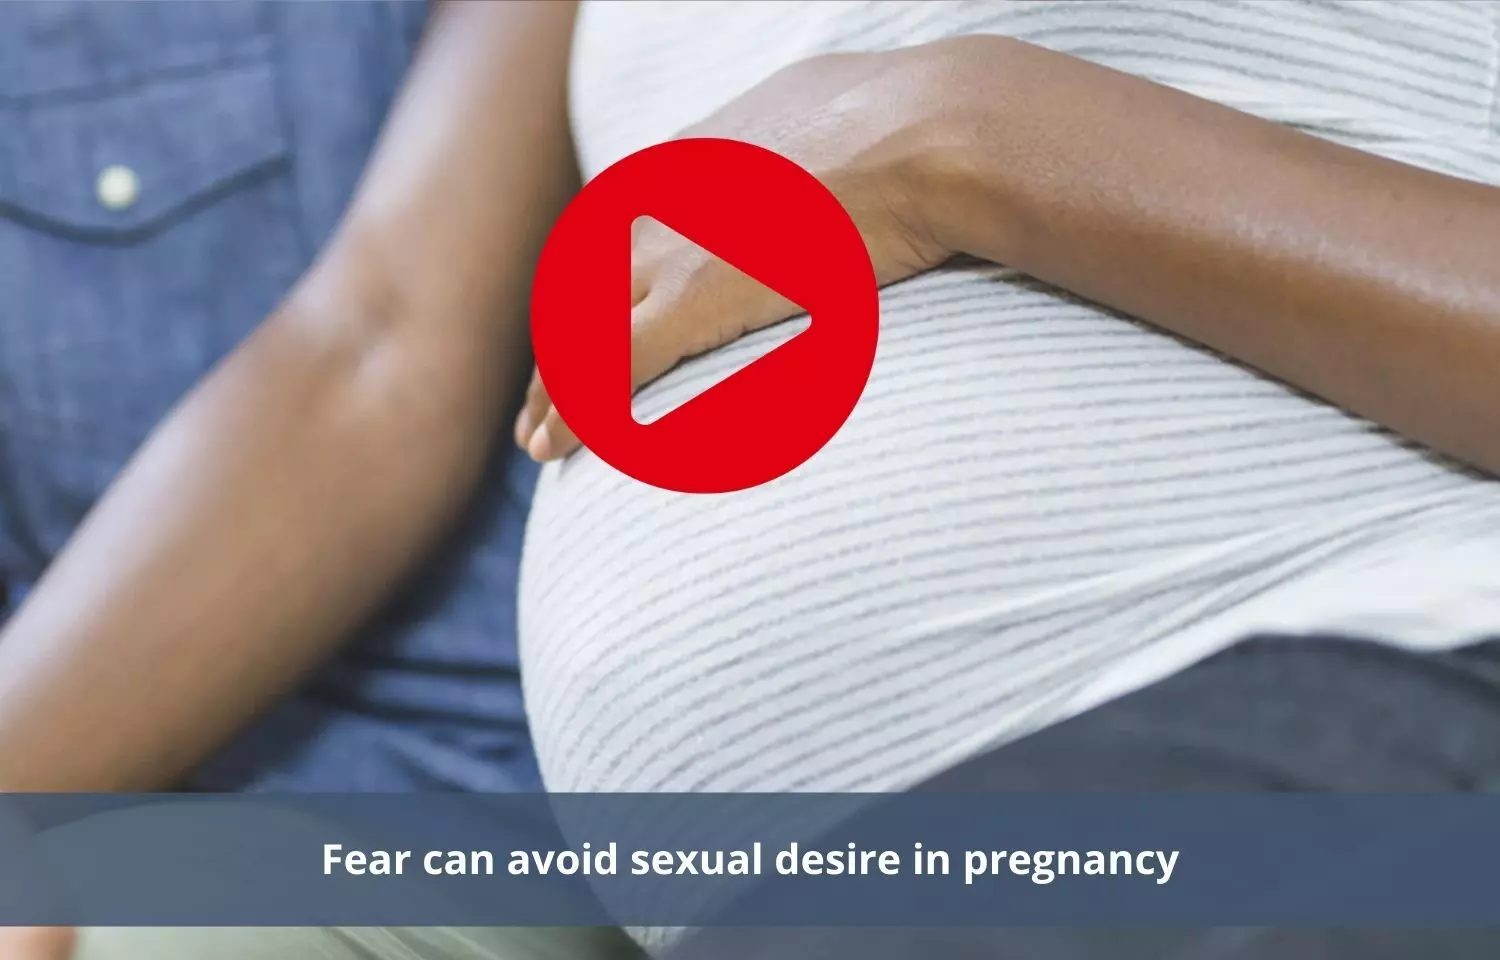 Fear in women avoids sexual desire during pregnancy